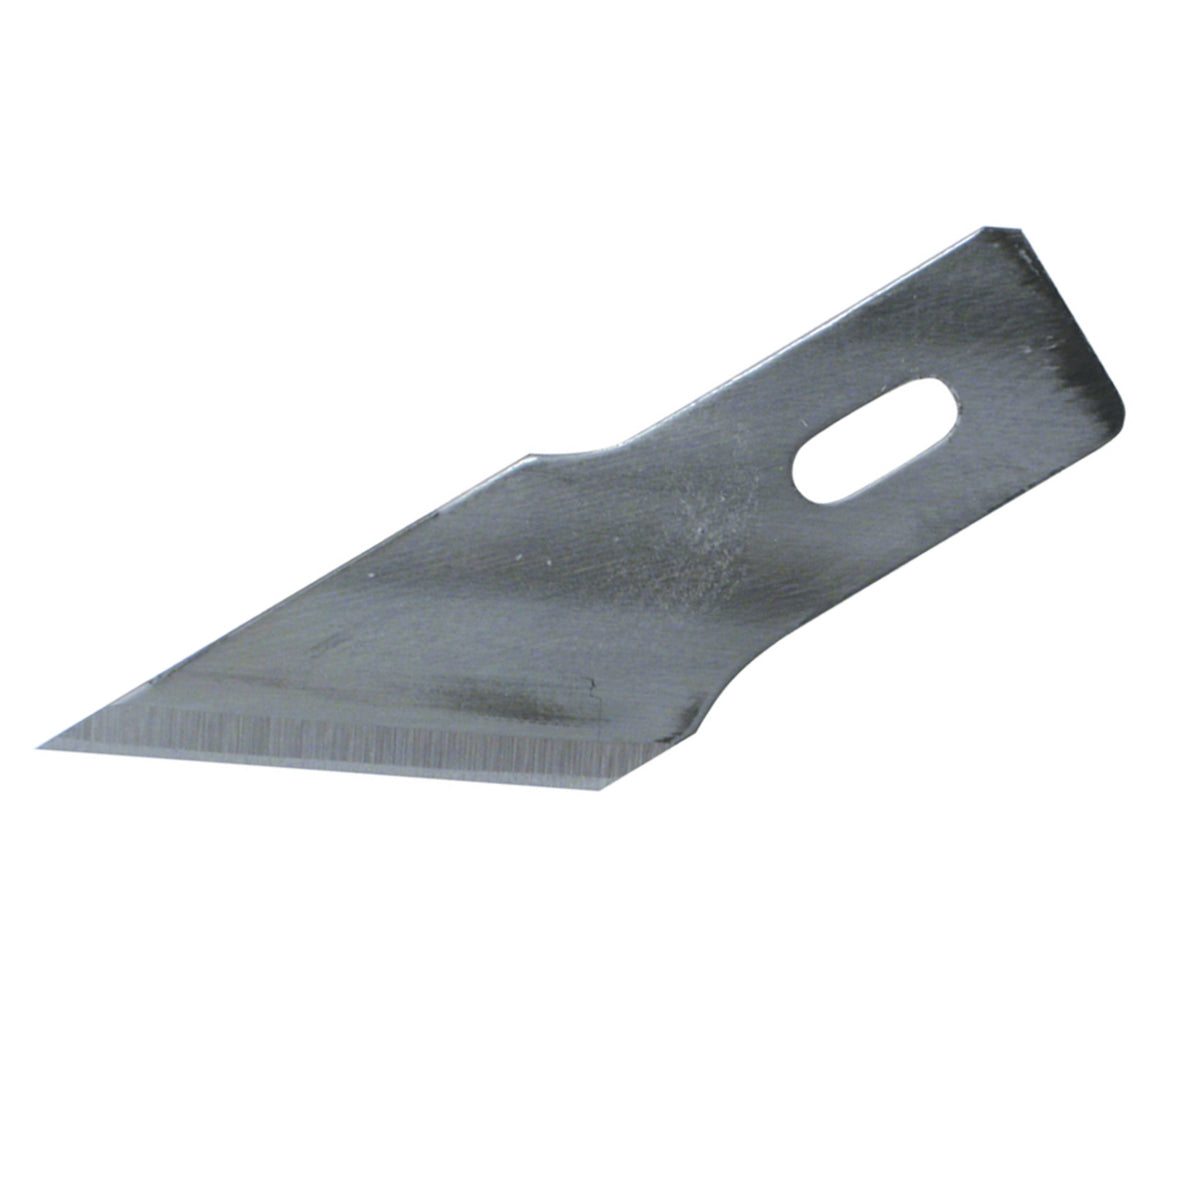 Wiha 43096 Blades for Universal Scraper Handle #24 - 10 Pack